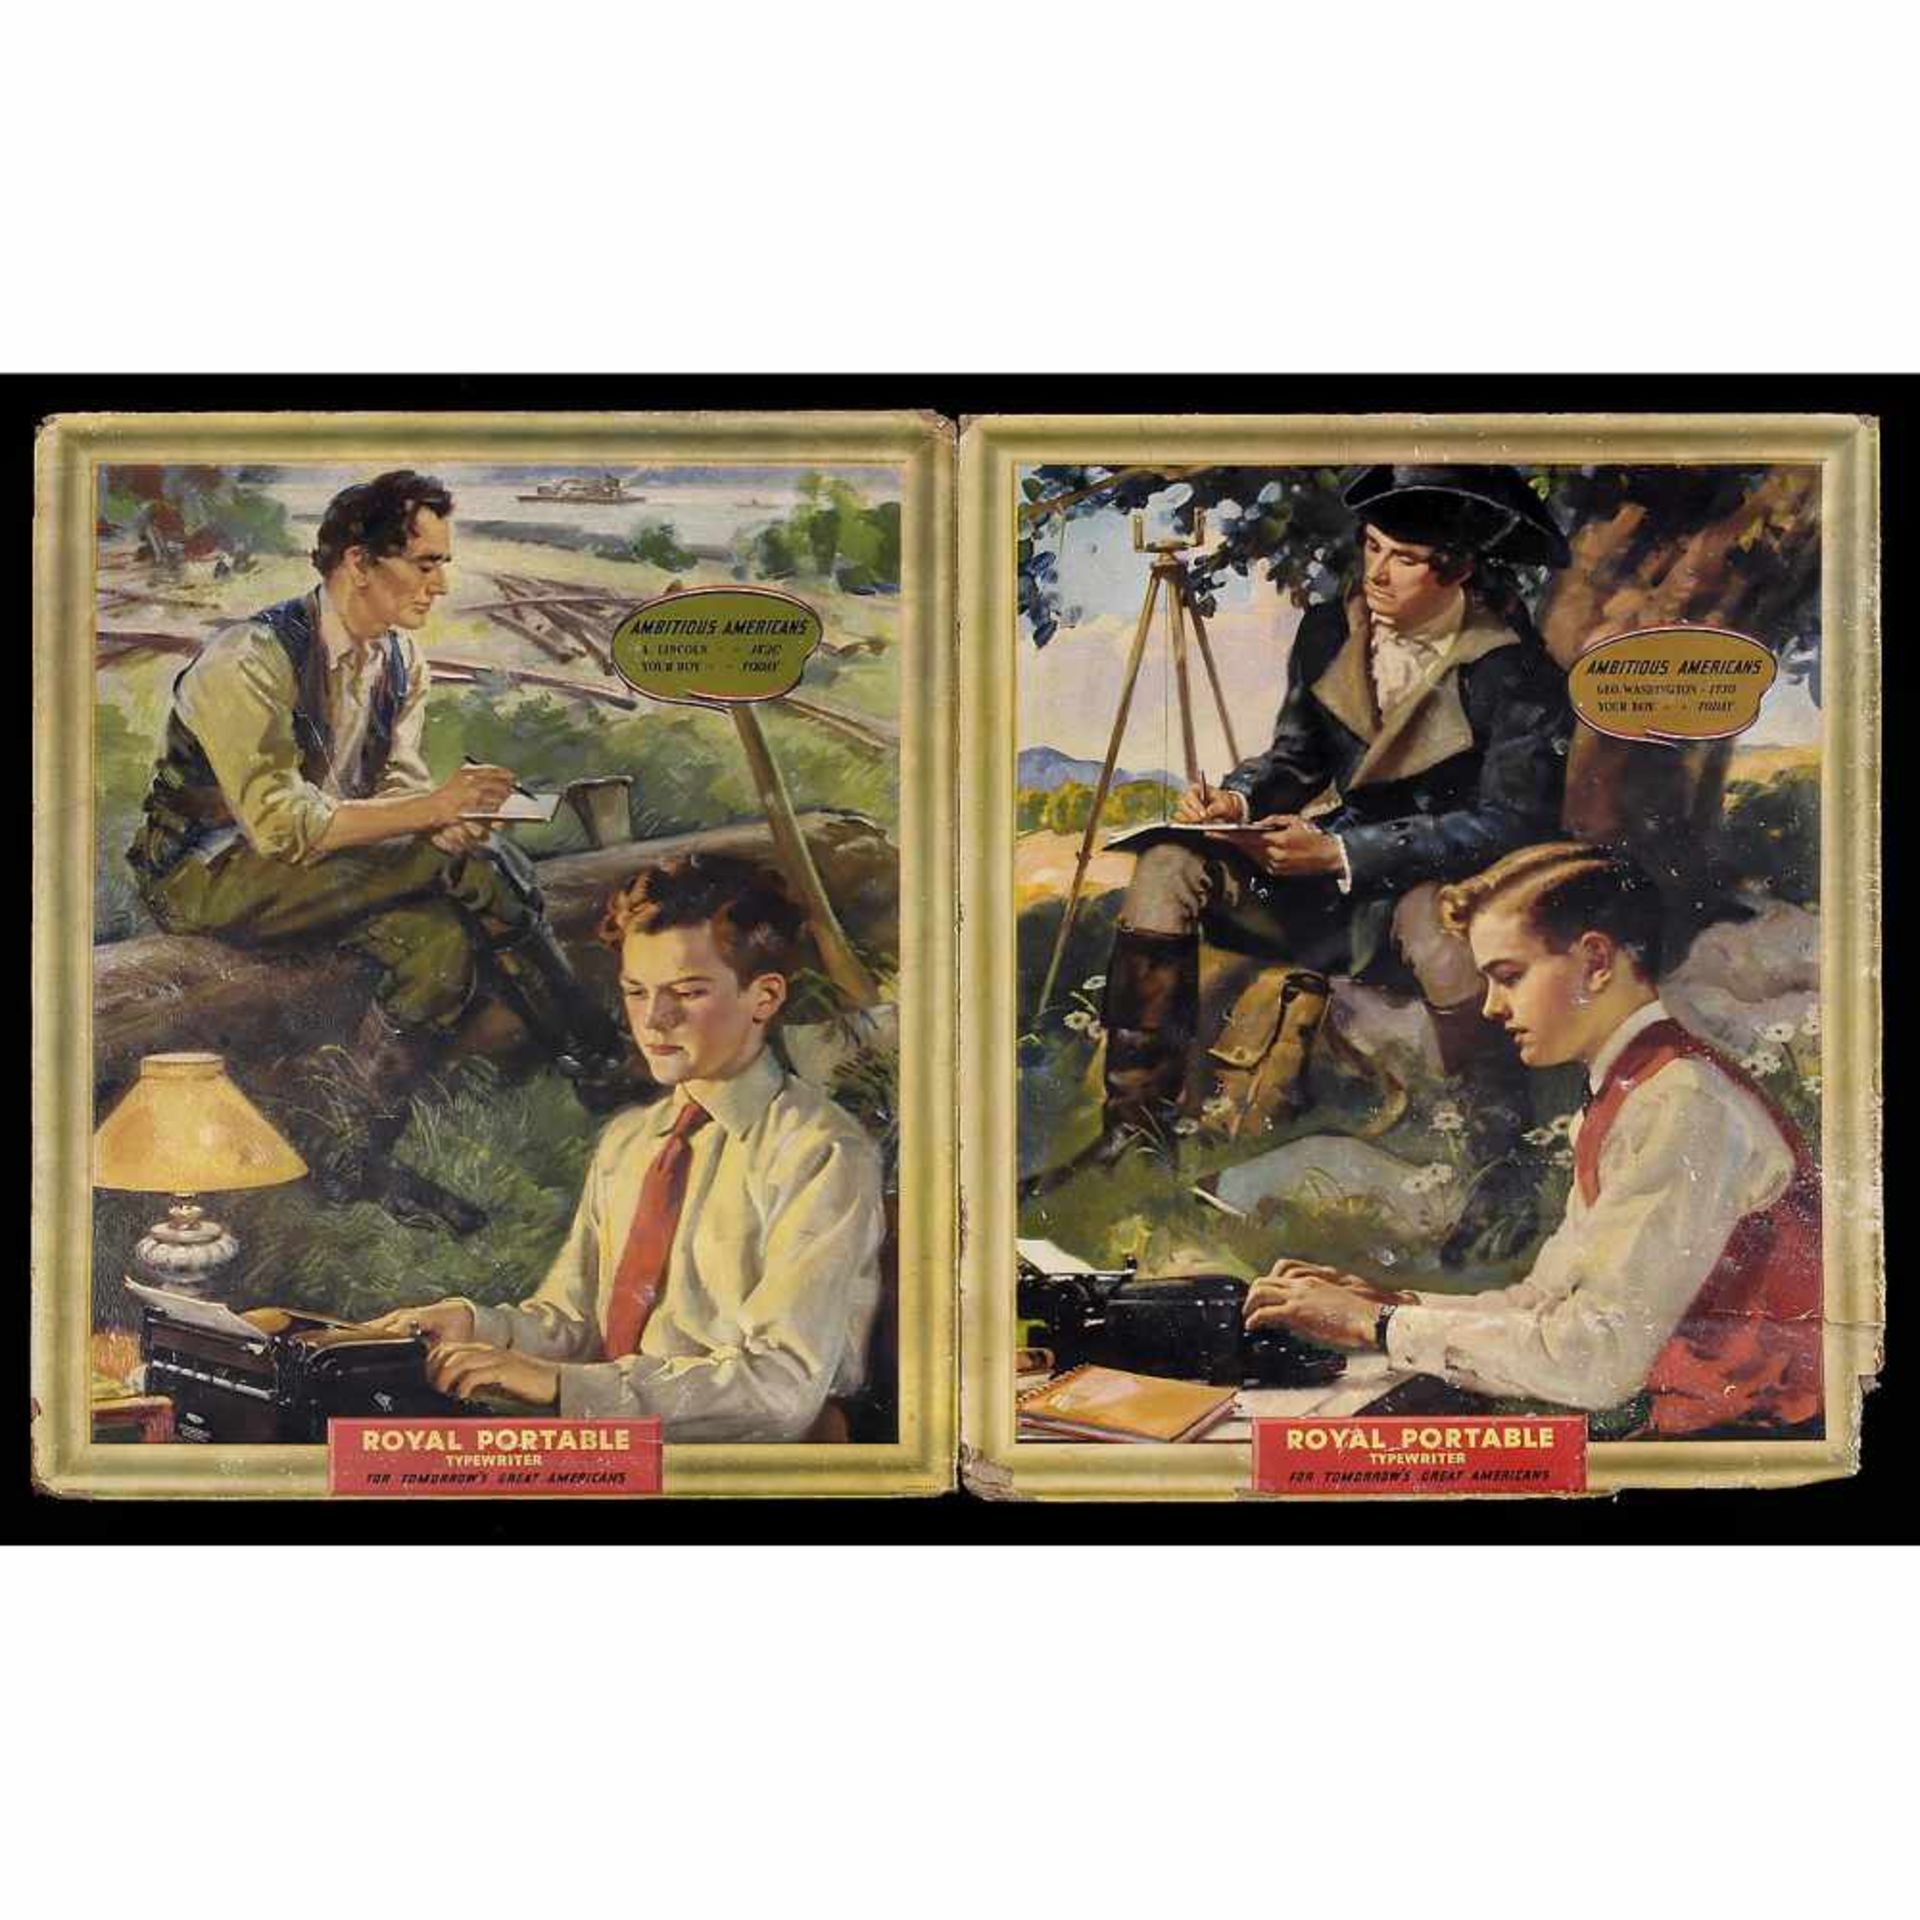 Office Machine Posters and Advertisements, c. 1900-50 - Bild 3 aus 5